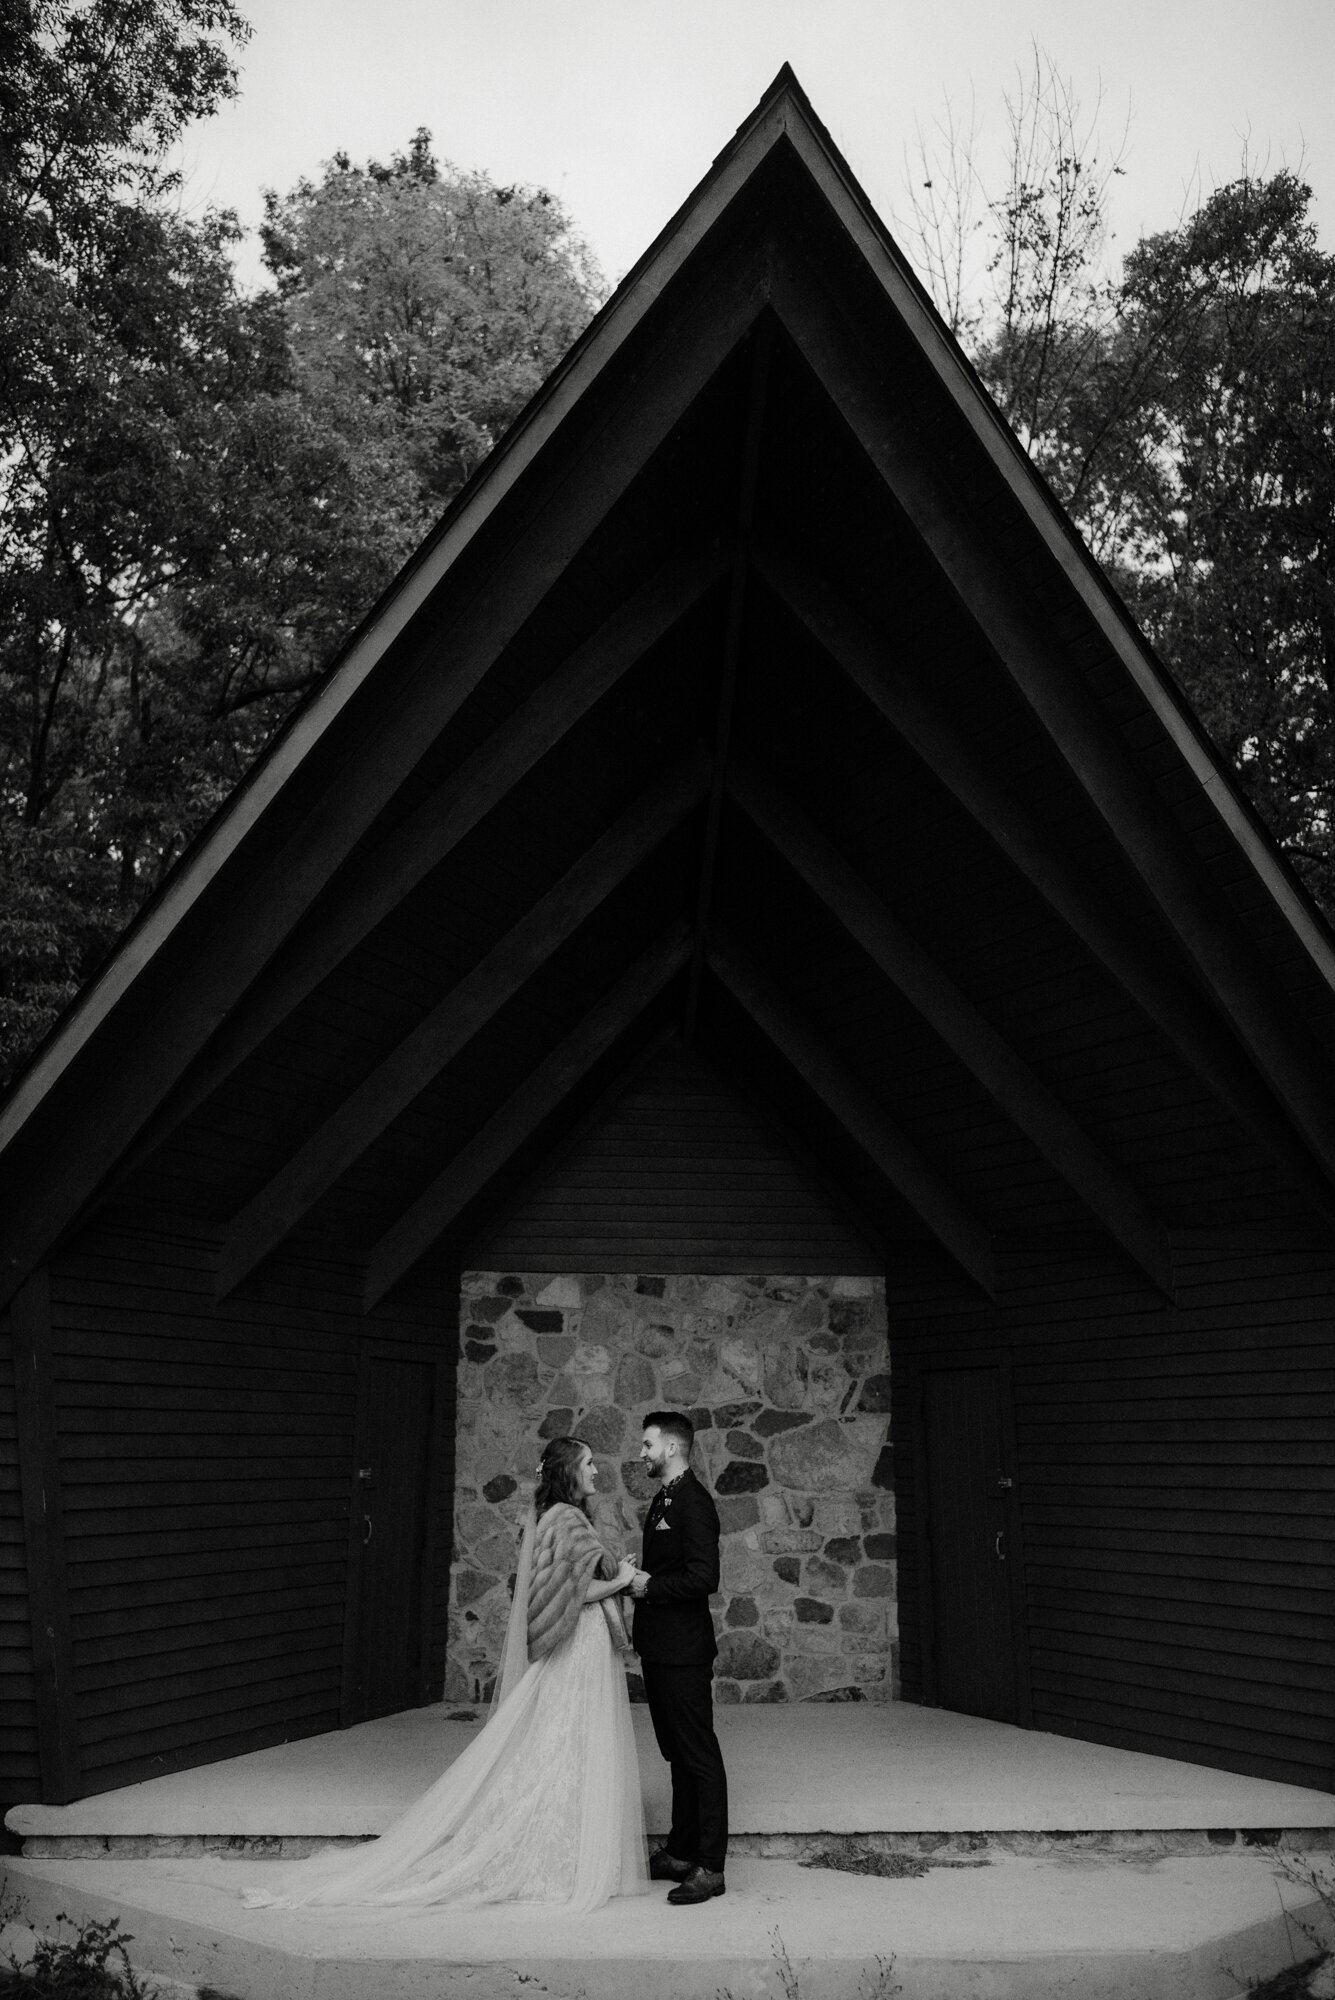 Sarah and Peyton - Rainy Autumn Wedding - Small Virginia Wedding - White Sails Creative Photography_4.jpg